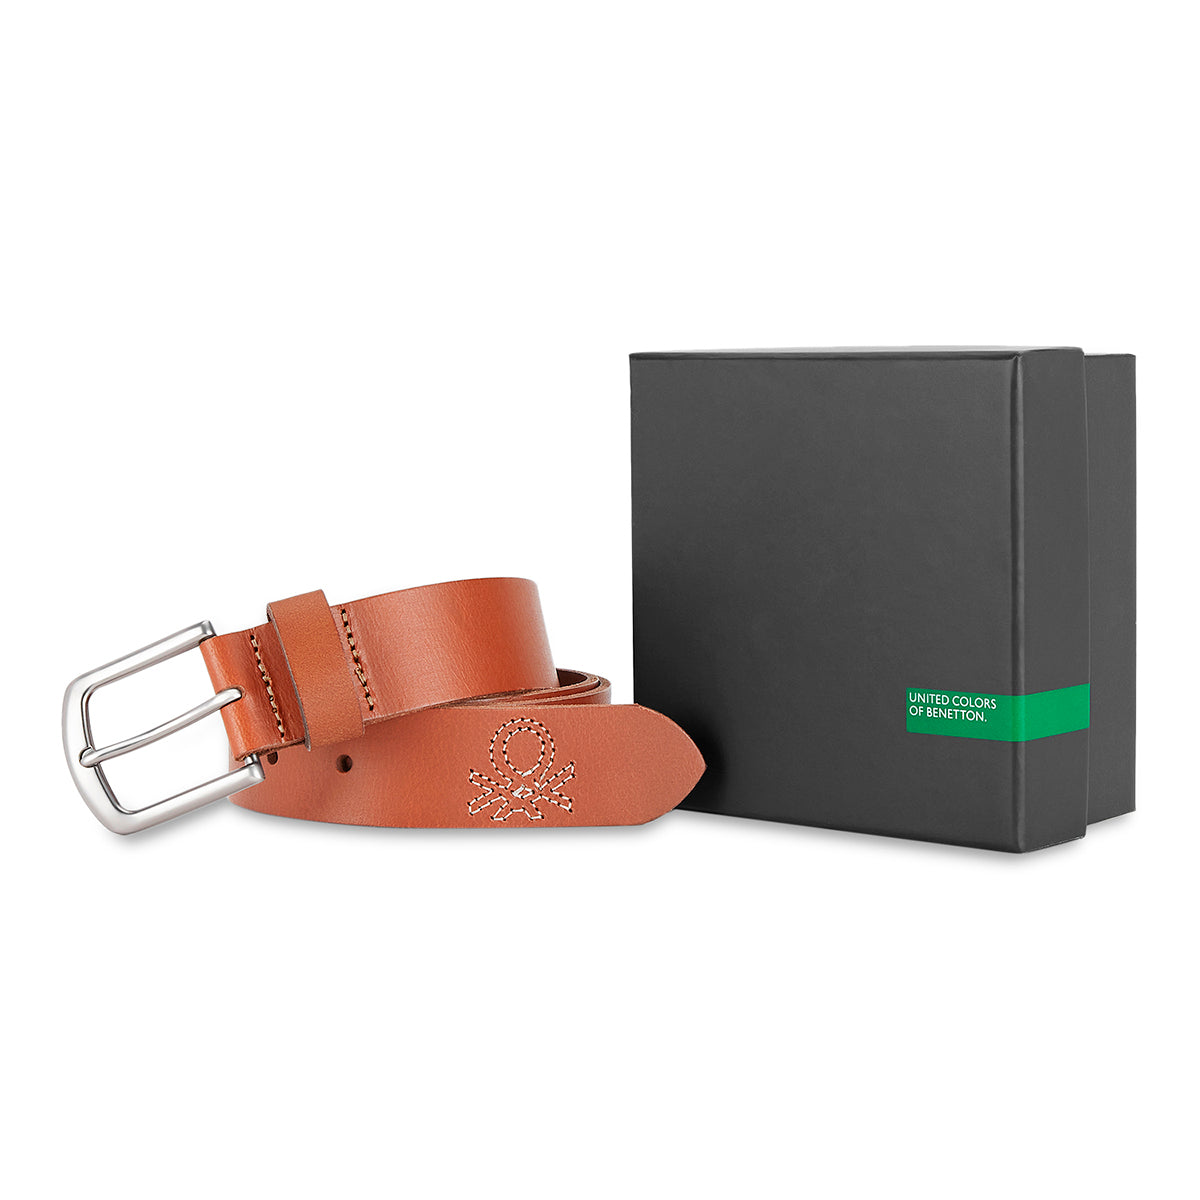 United Colors of Benetton Bradano Men’s Non-Reversible Leather Belt-Tan